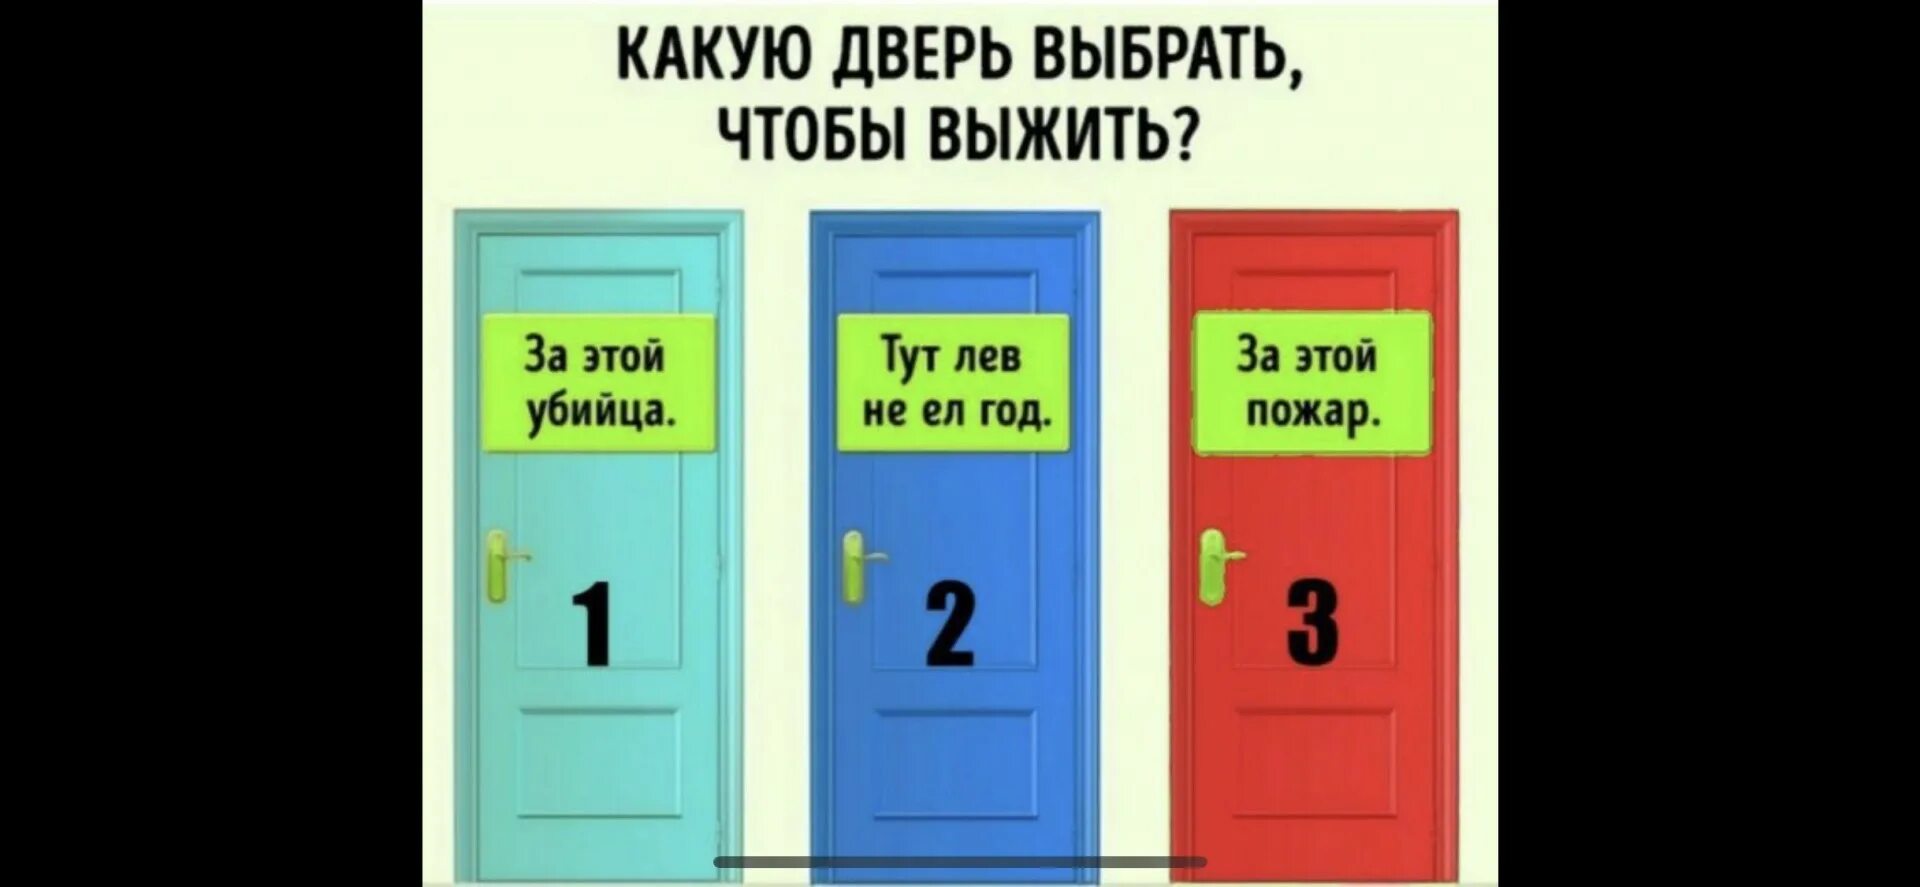 Загадка про двери и стражников. Загадка про две двери. Дверь 2 на 2. Задача про охранников и двери. Загадка про 2 двери и двух охранников.